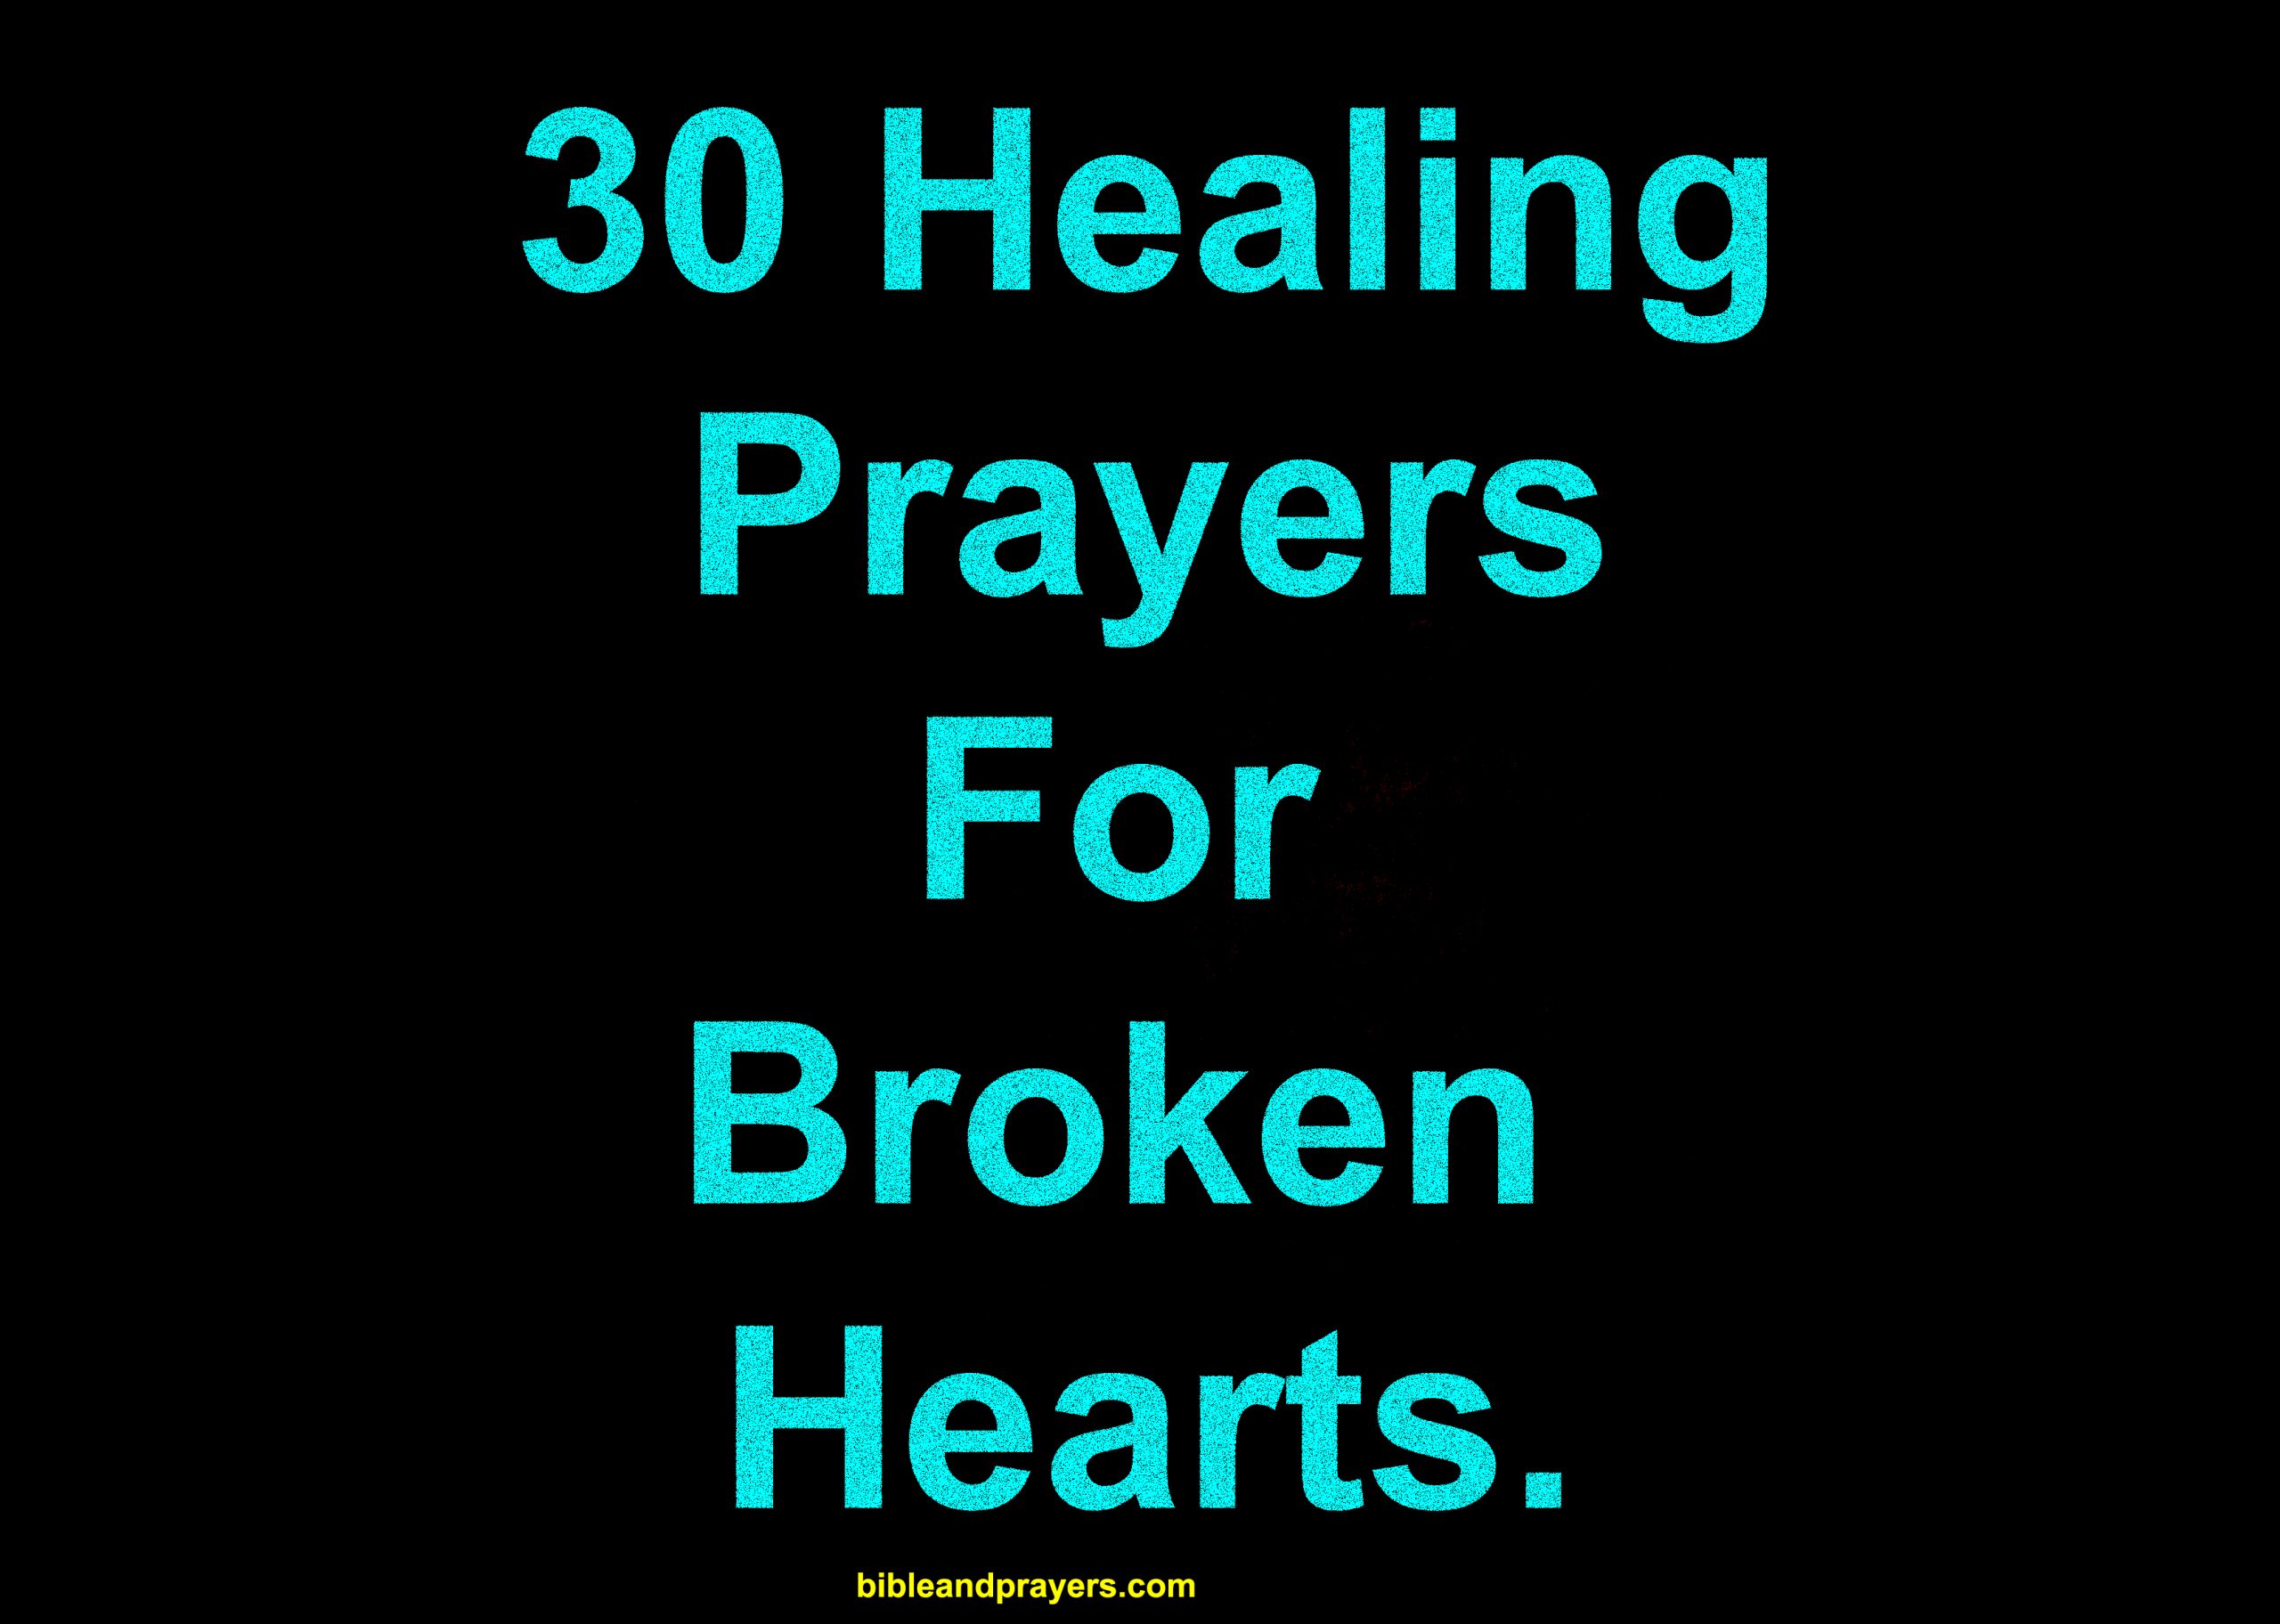 30 Healing Prayers For Broken Hearts.